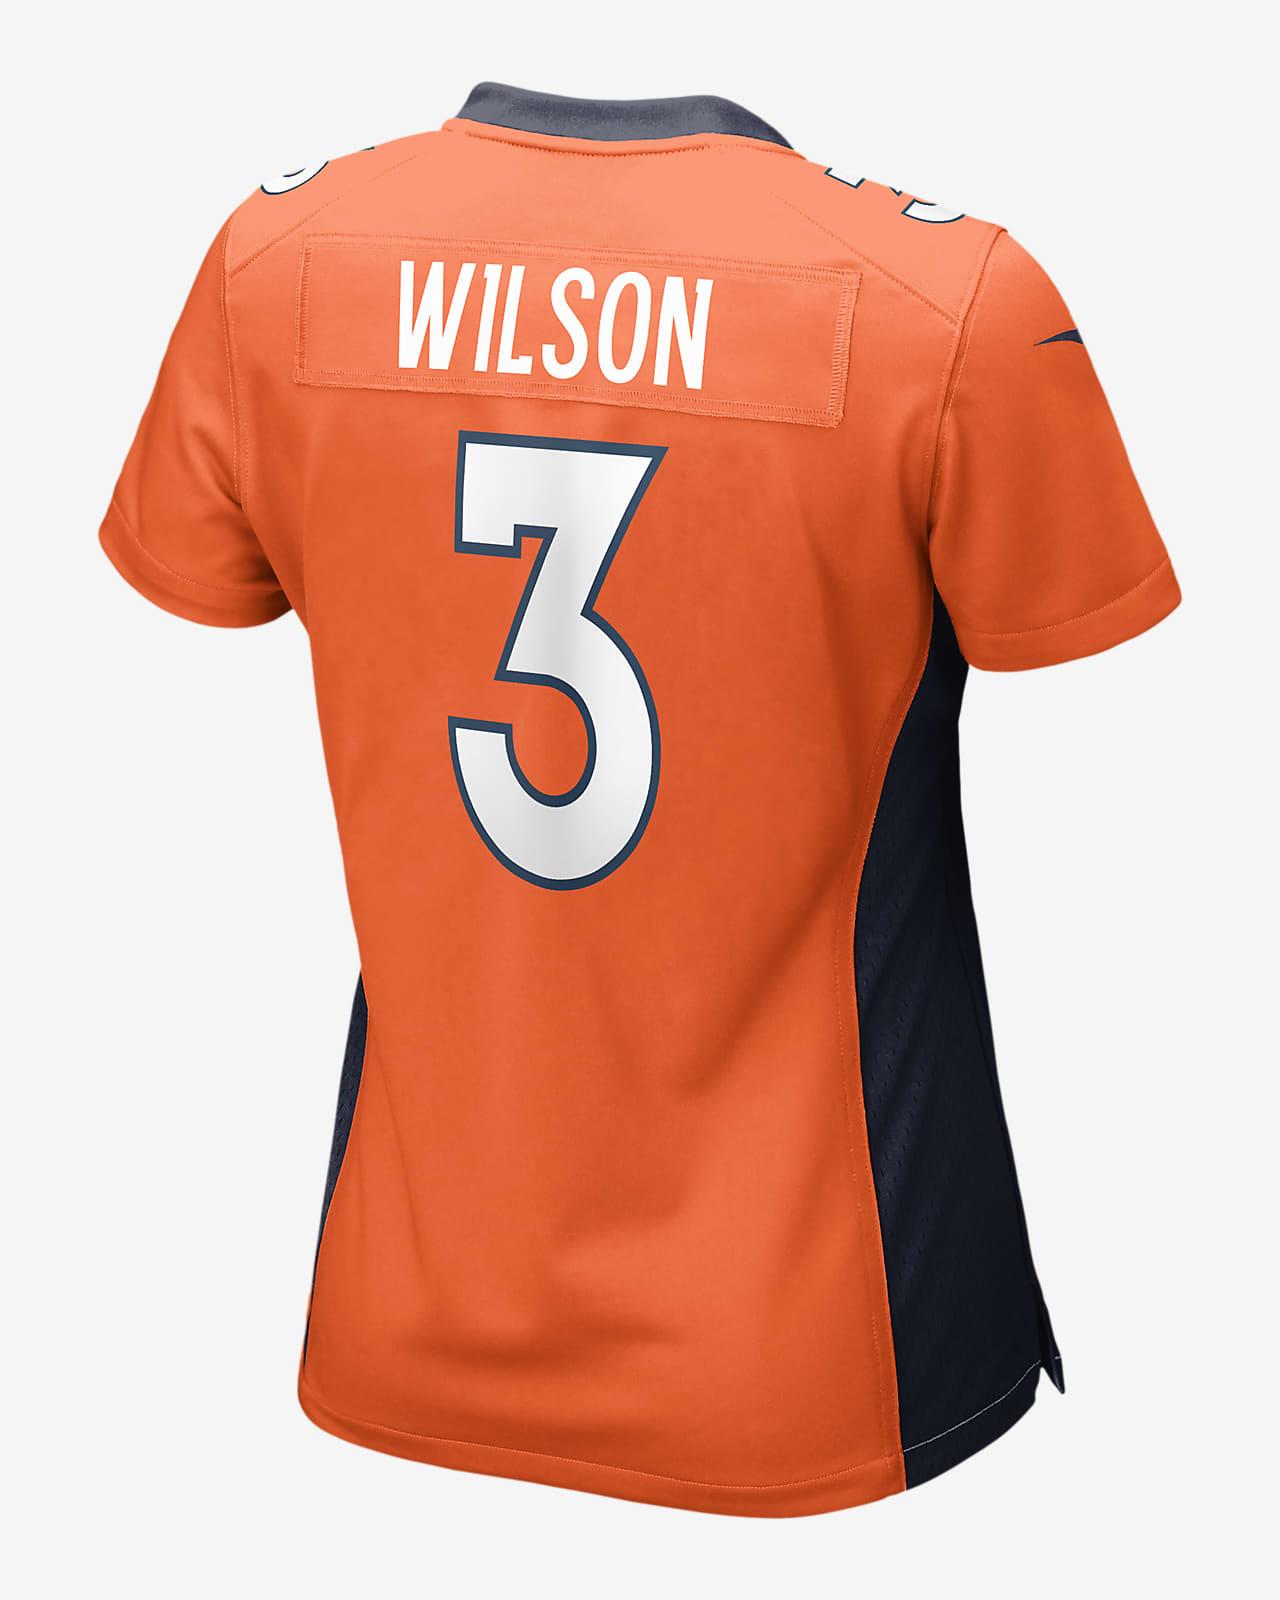 russell wilson jersey on sale